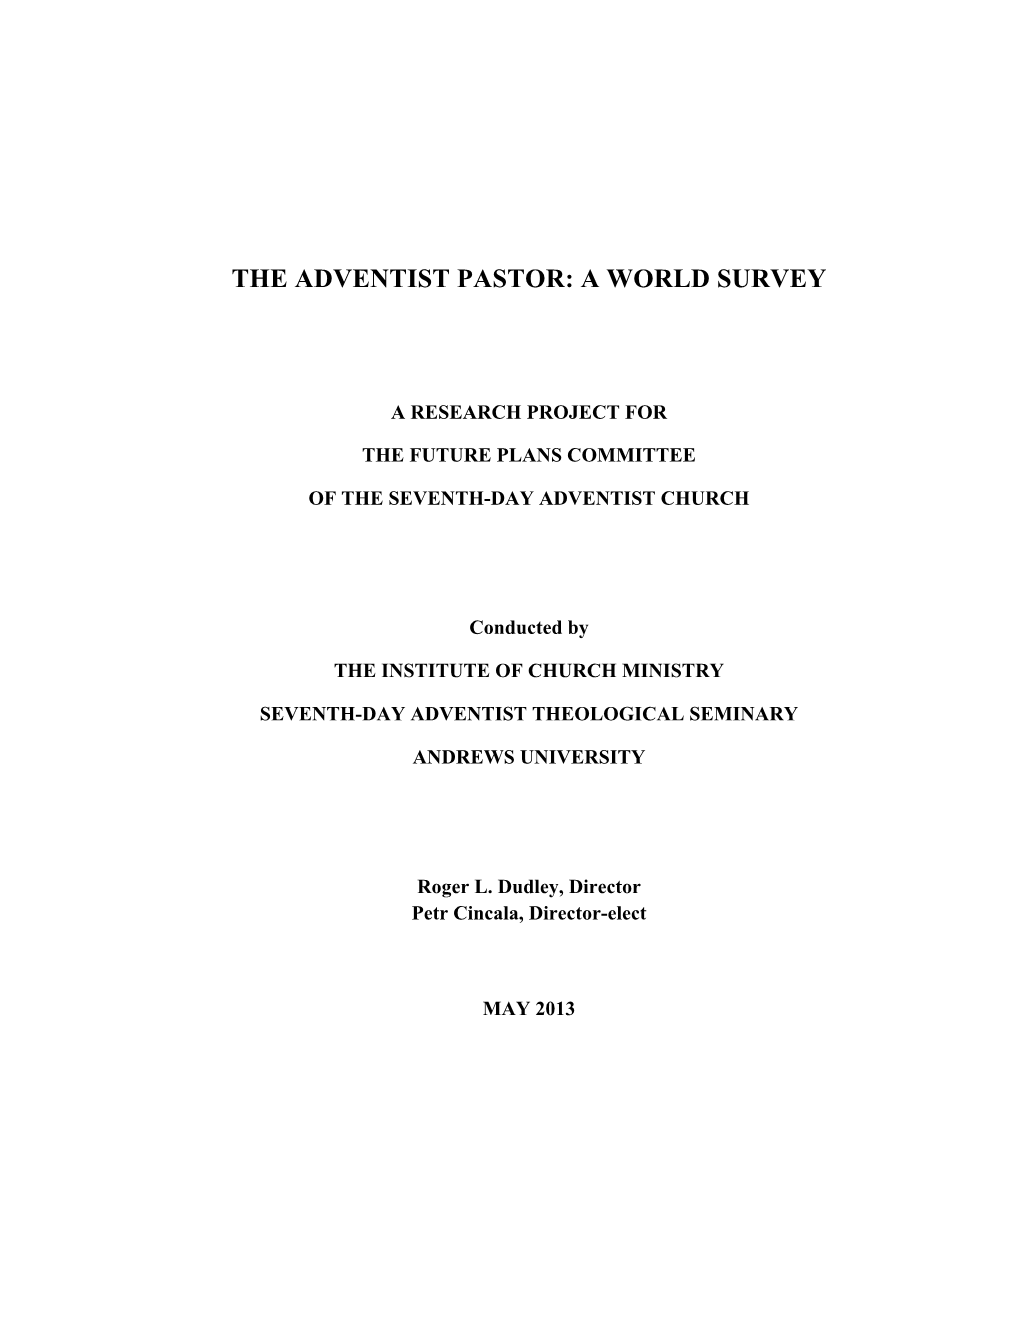 The Adventist Pastor: a World Survey